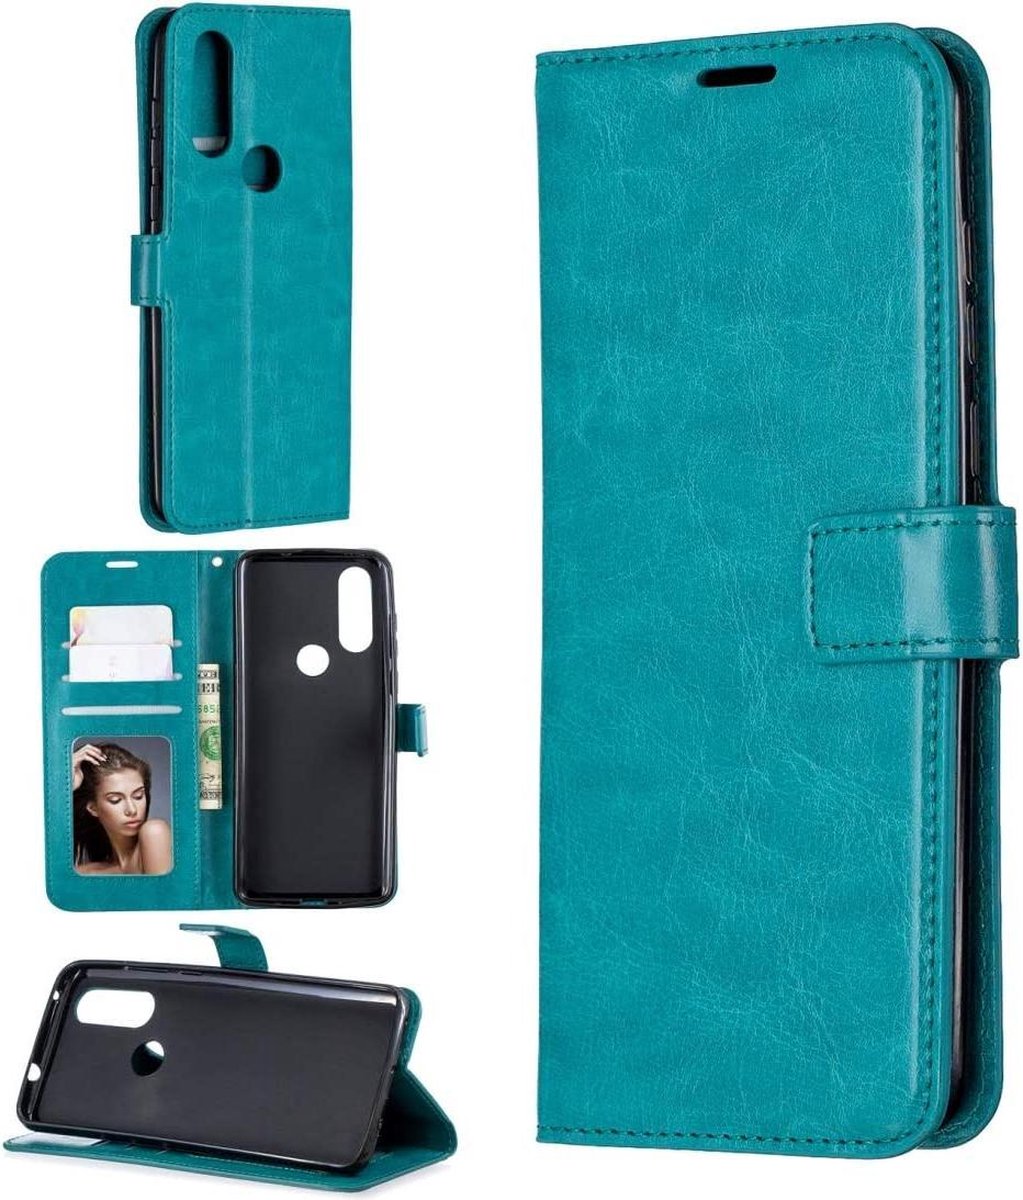 Motorola Moto One Action hoesje book case turquoise